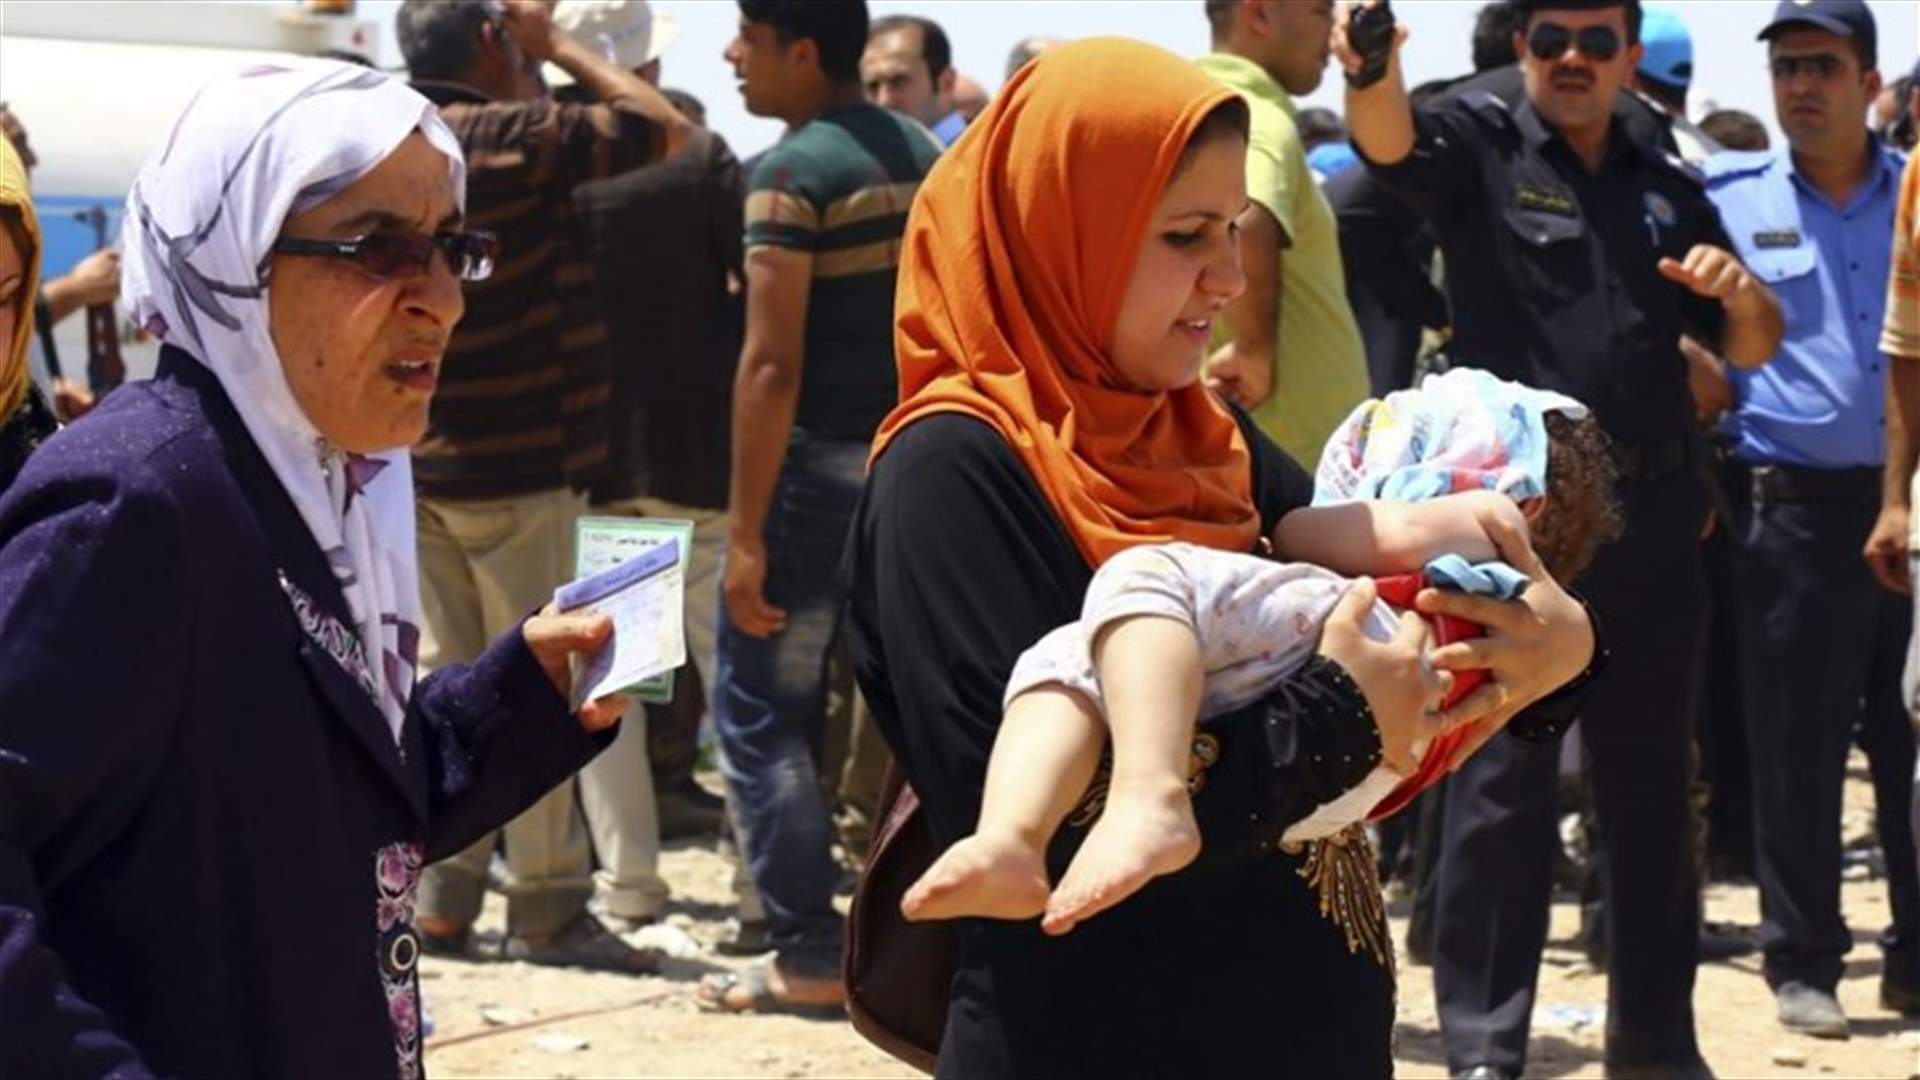 100,000 Iraqis may flee Mosul for Syria, Turkey - UN